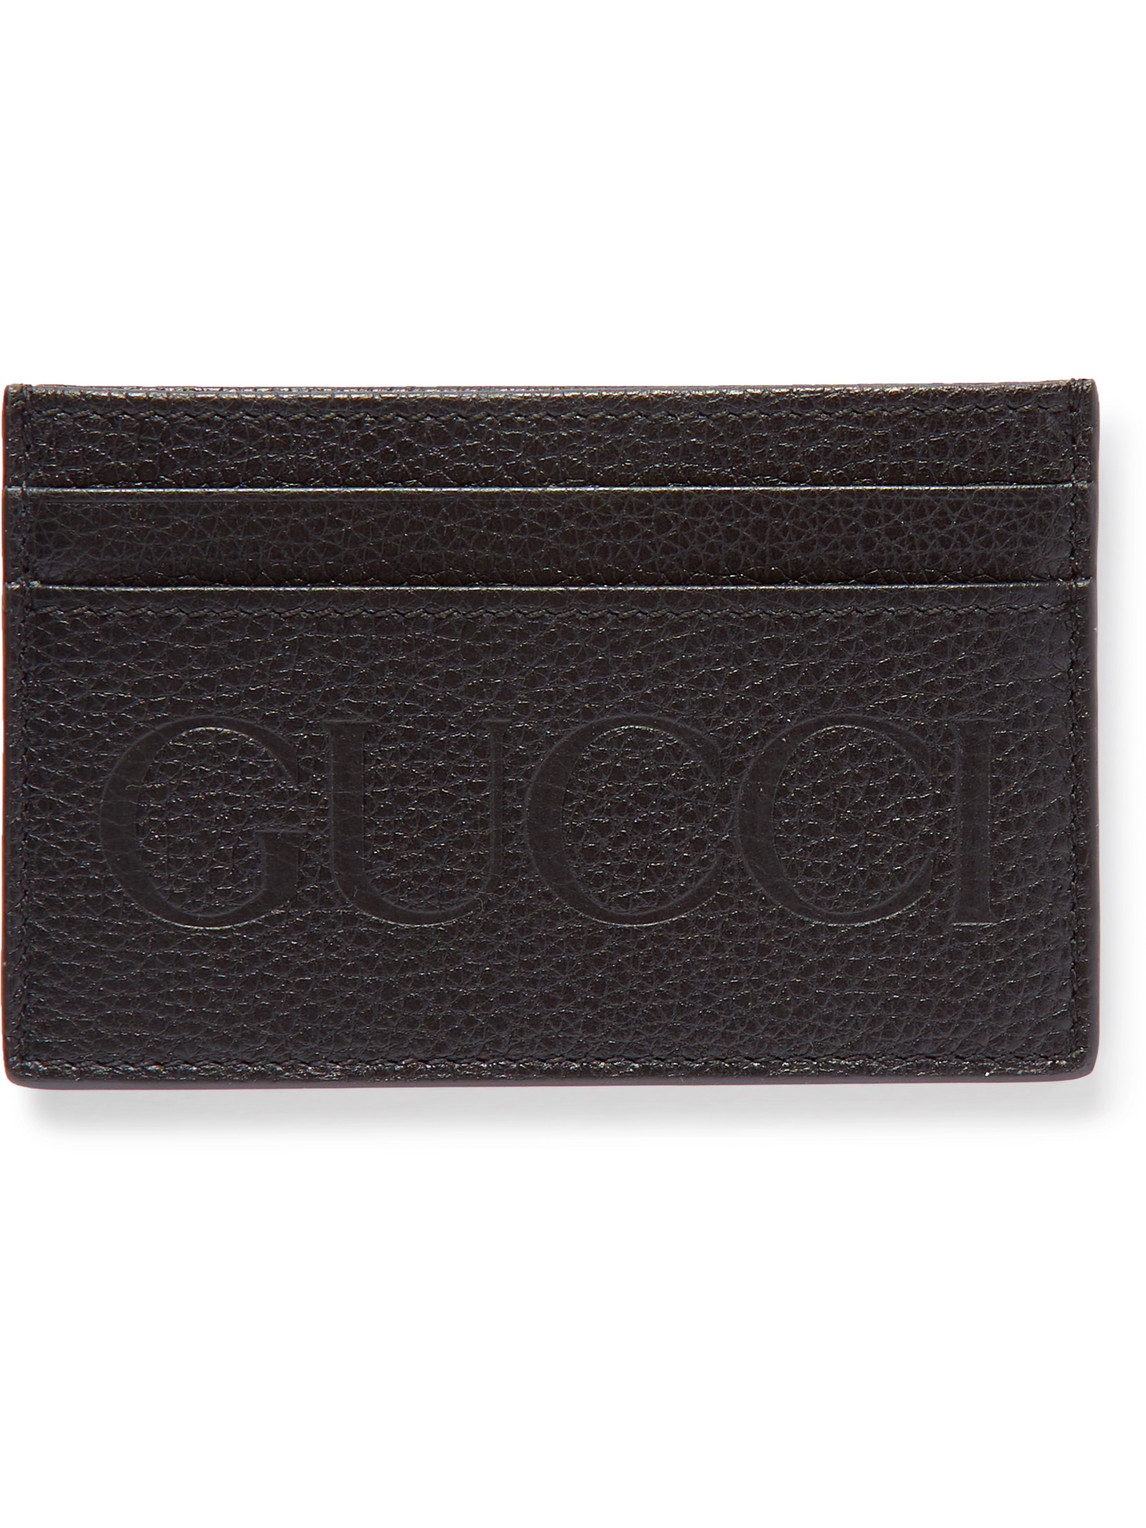 GUCCI Logo-Embossed Pebble-Grain Leather Cardholder